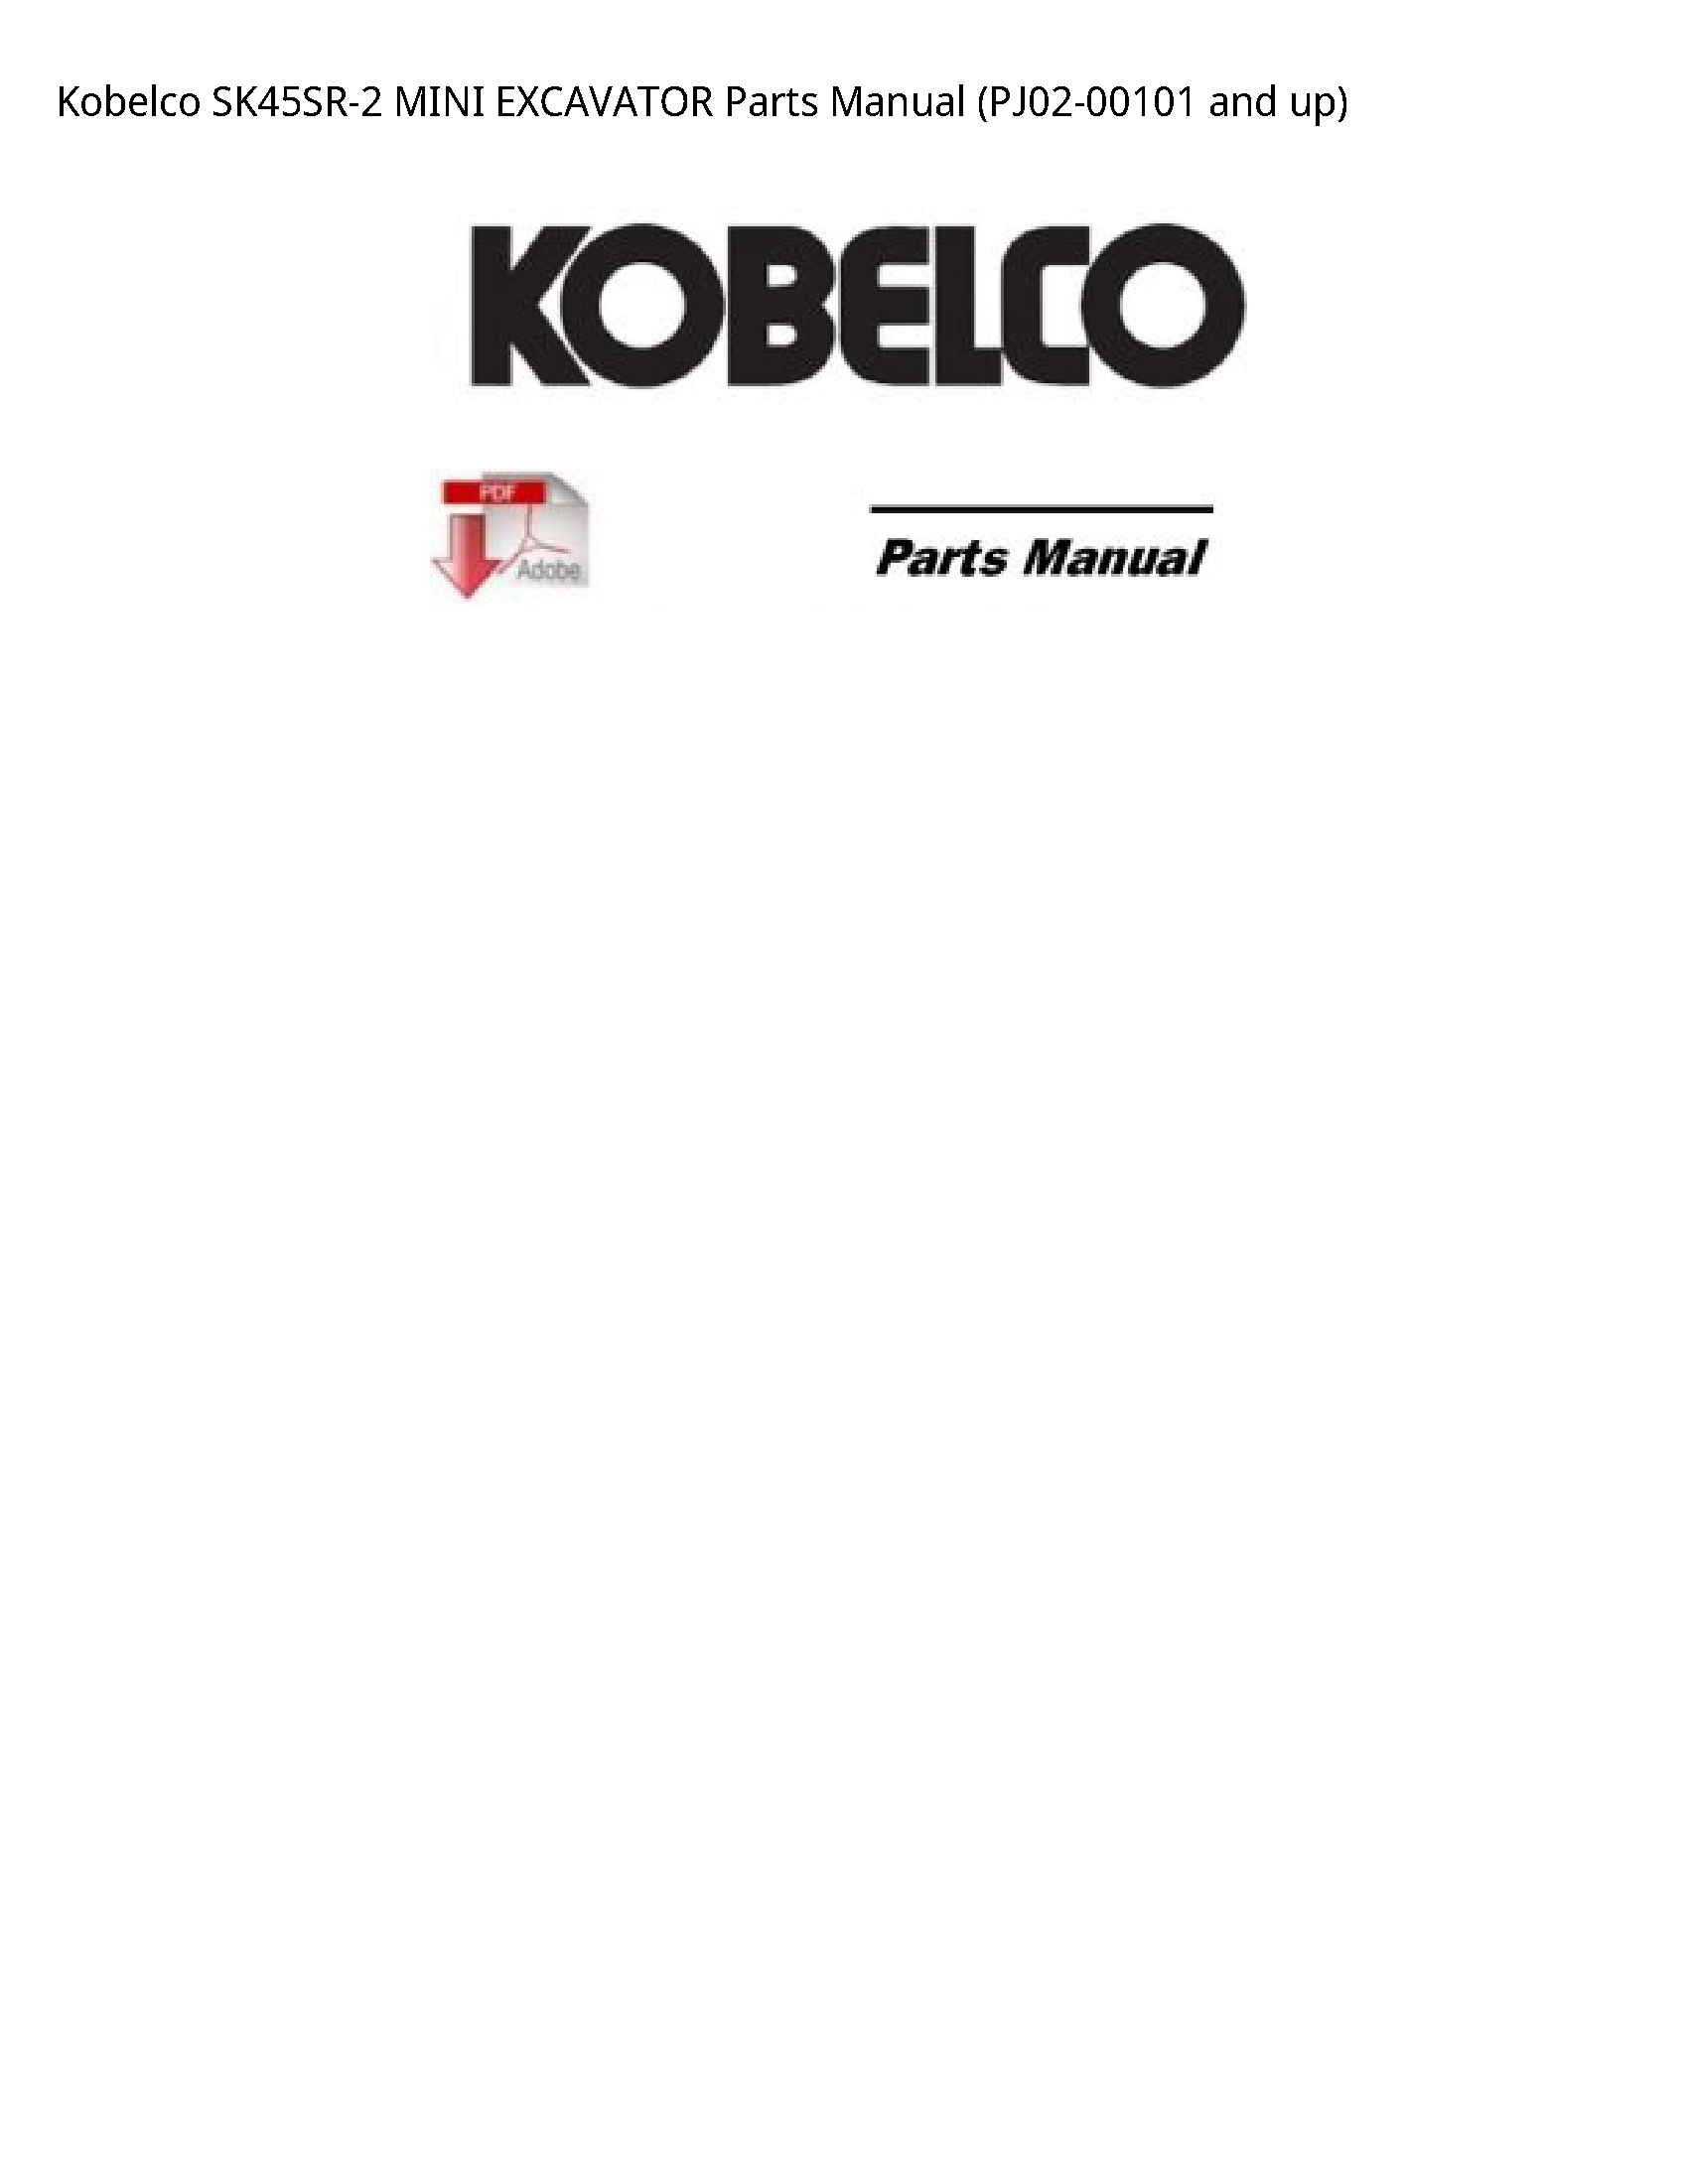 Kobelco SK45SR-2 MINI EXCAVATOR Parts manual